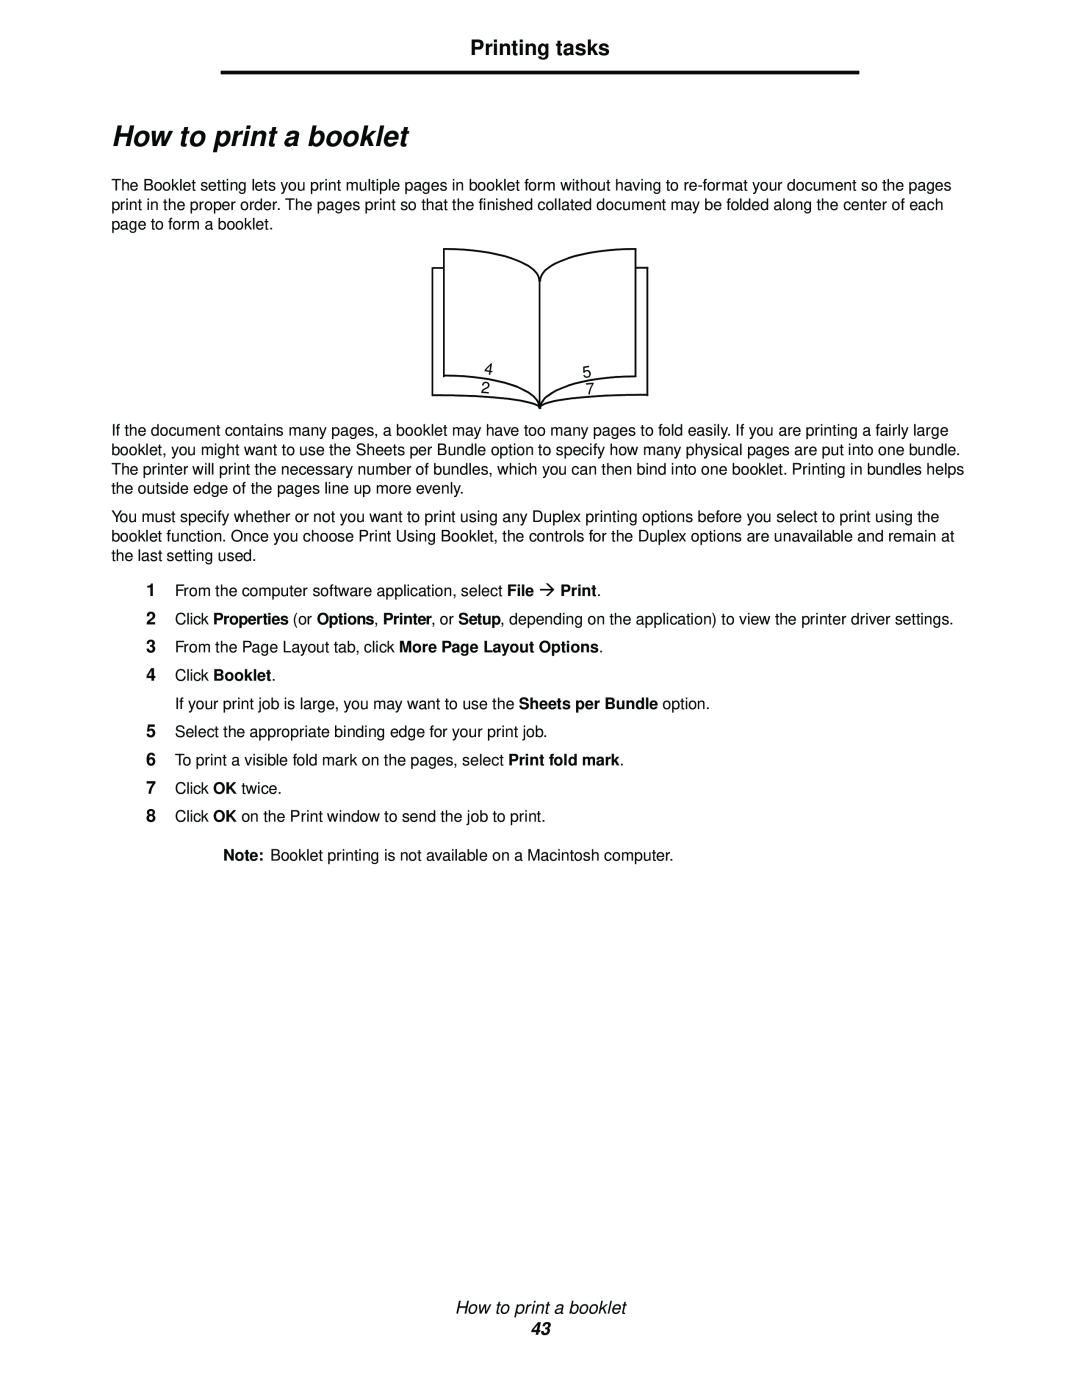 Lexmark 340, 342n manual How to print a booklet, Printing tasks 